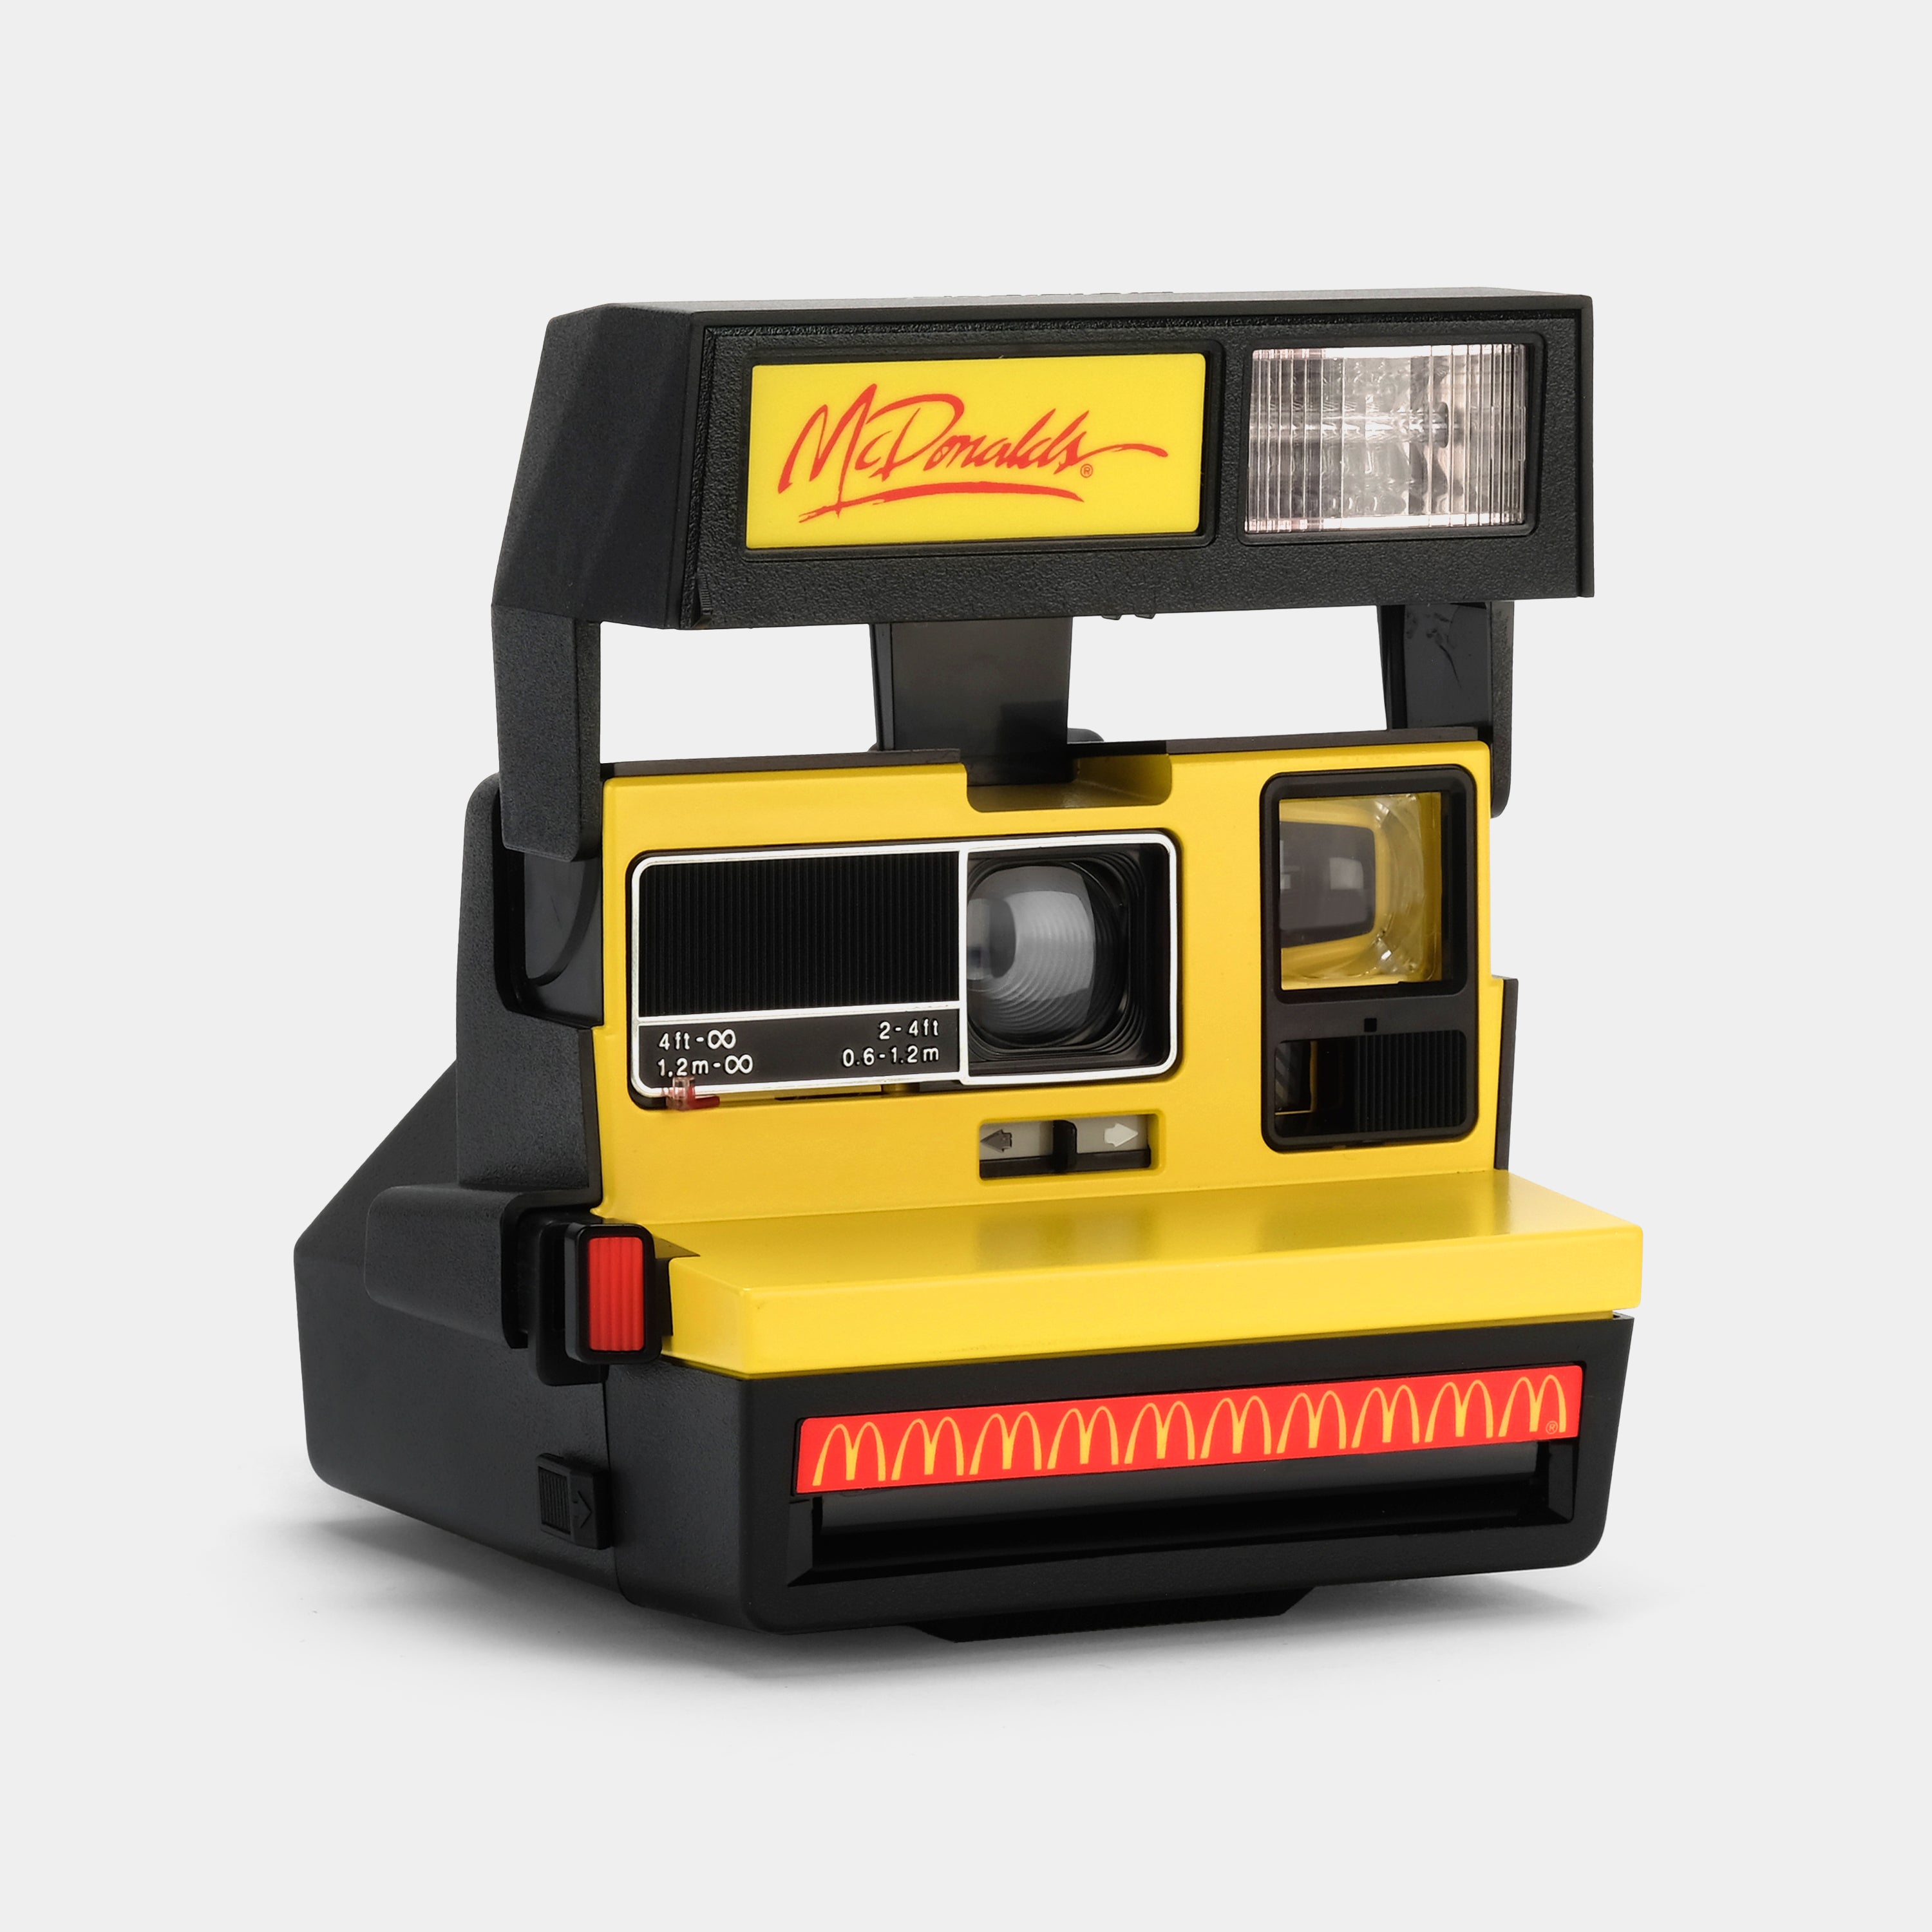 Polaroid 600 Business Edition Instant Film Camera Special Professional